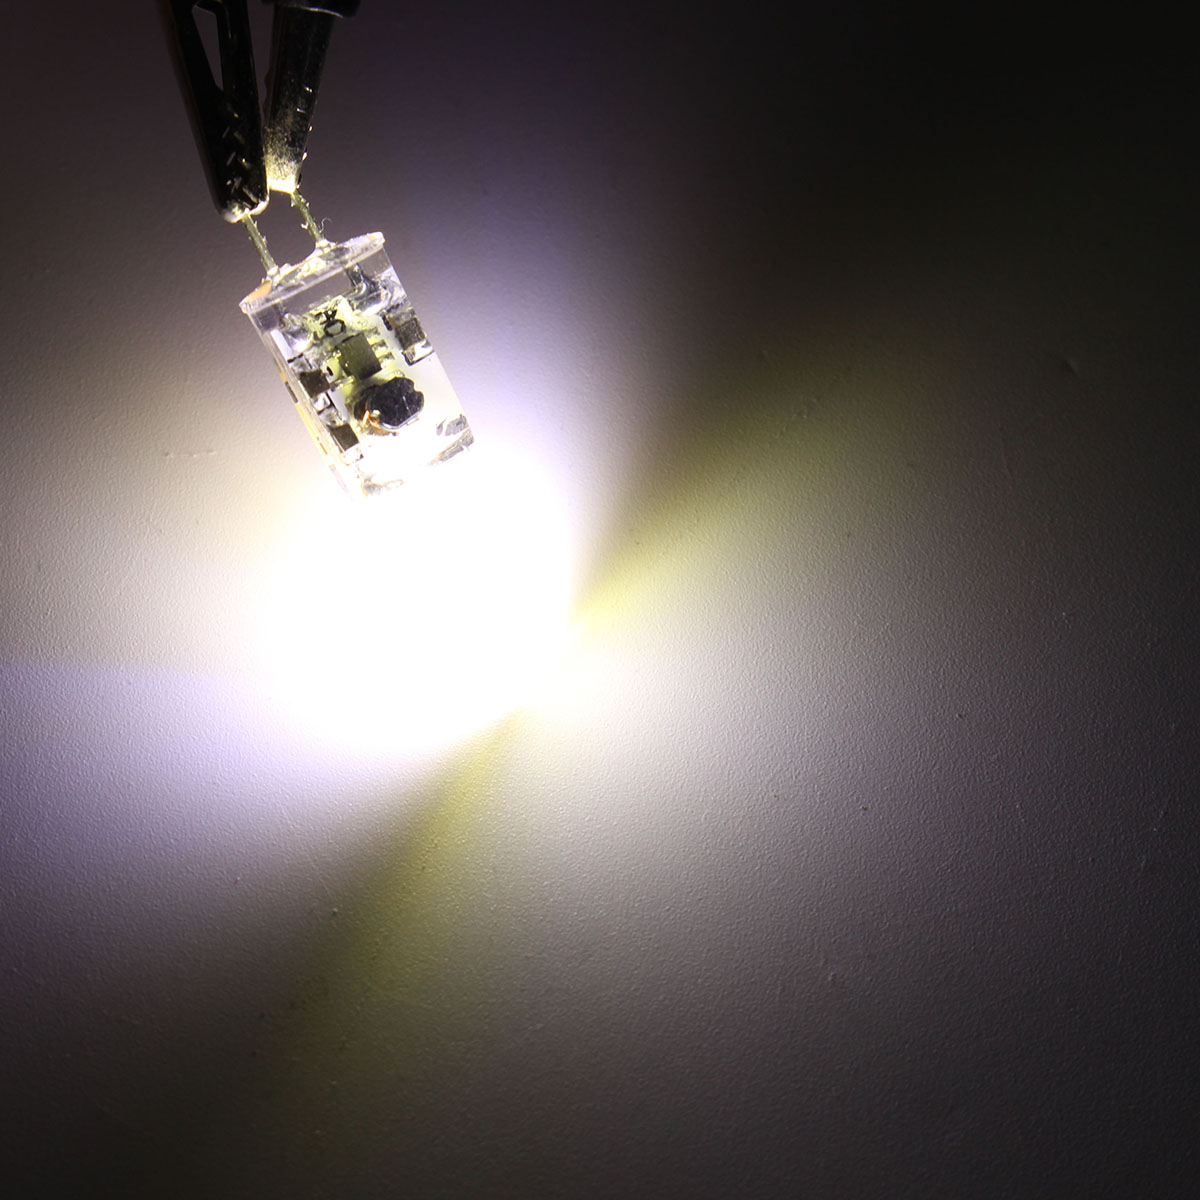 4PCS-Mini-G4-2W-Pure-White-COB-LED-Bulb-for-Chandelier-Light-Replace-Halogen-Lamp-DCAC12V-1454467-6